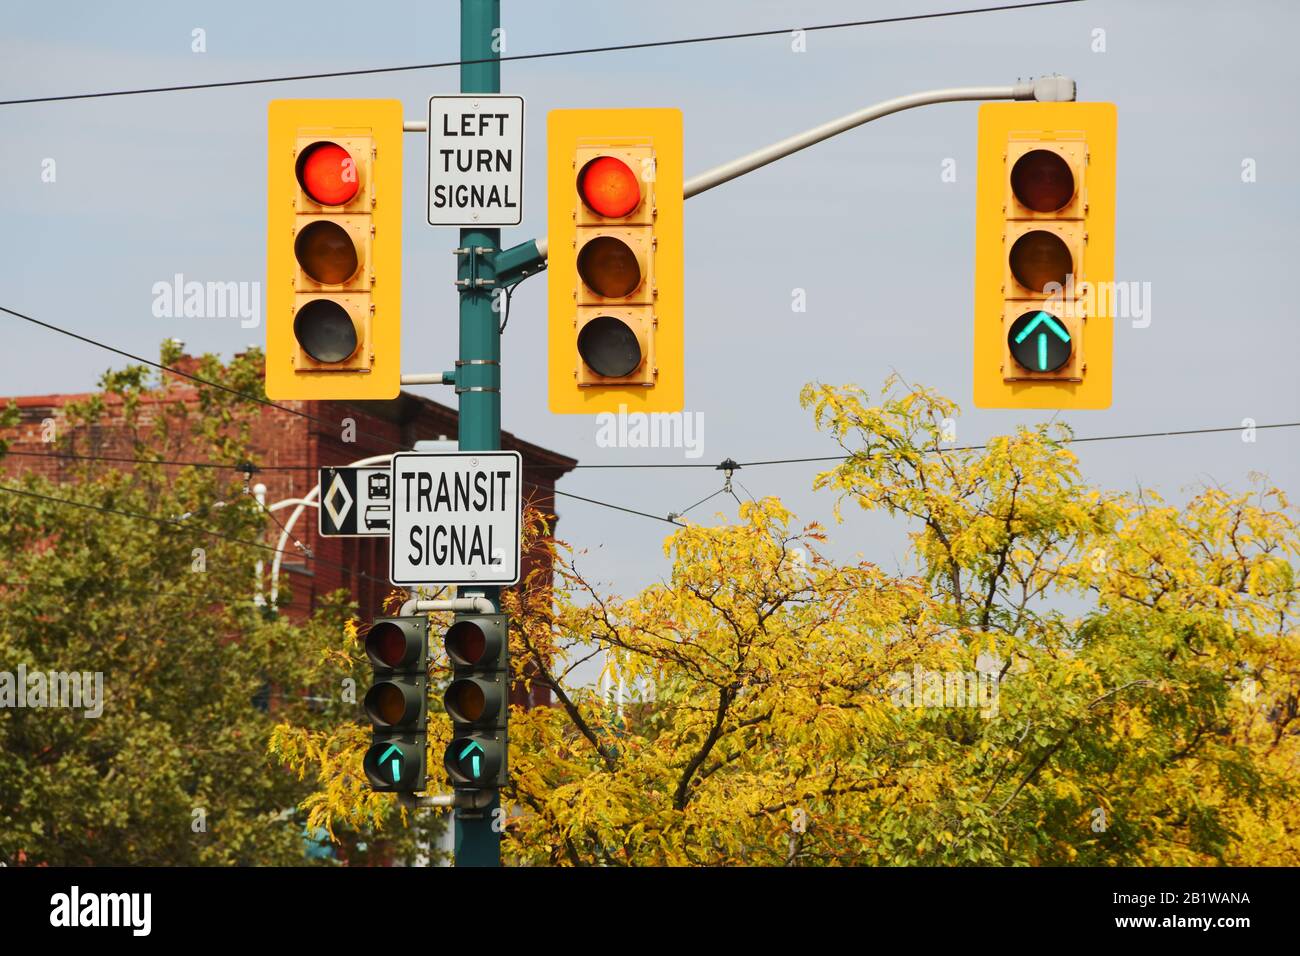 transit-signal-traffic-lights-toronto-canada-2B1WANA.jpg